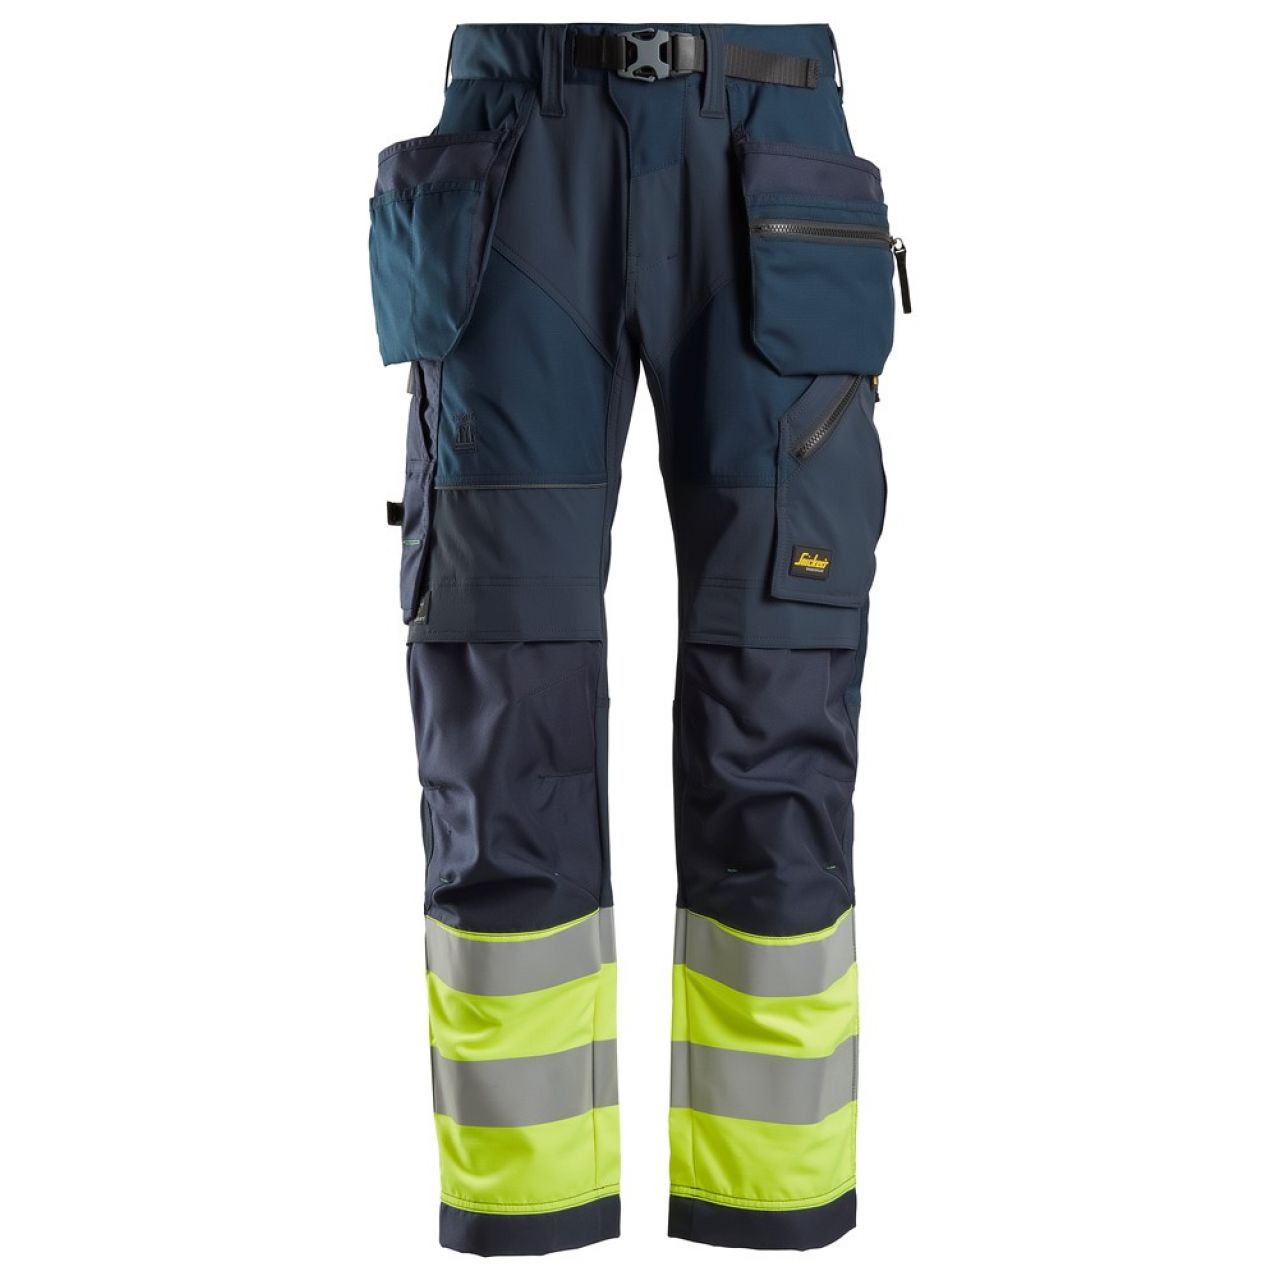 6931 Pantalones largos de trabajo de alta visibilidad clase 1 con bolsillos flotantes FlexiWork azul marino-amarillo talla 258